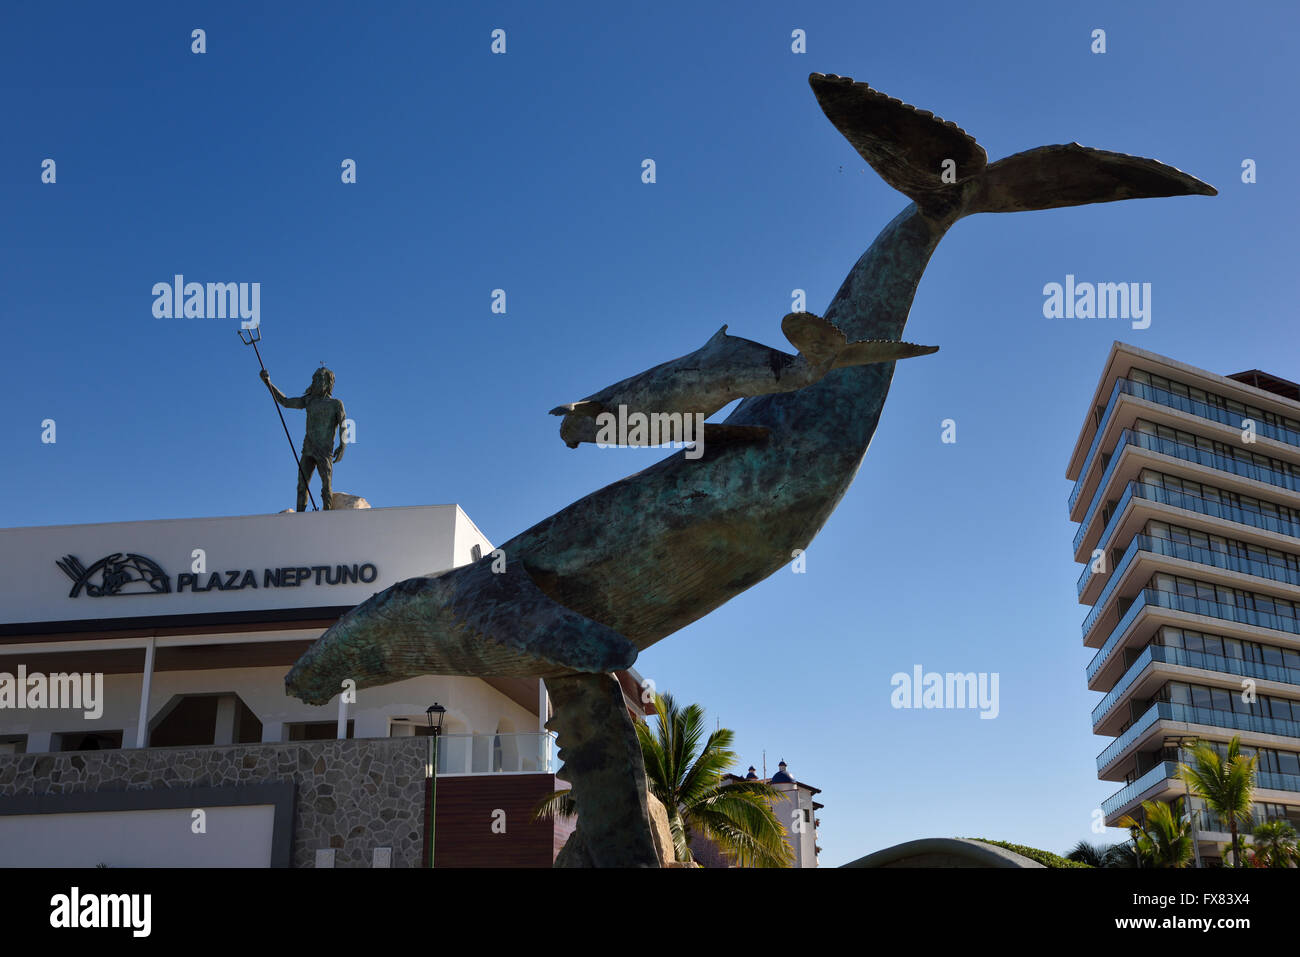 The Vallarta Whale and her calf sculpture at Neptune Plaza in Puerto Vallarta Mexico Stock Photo